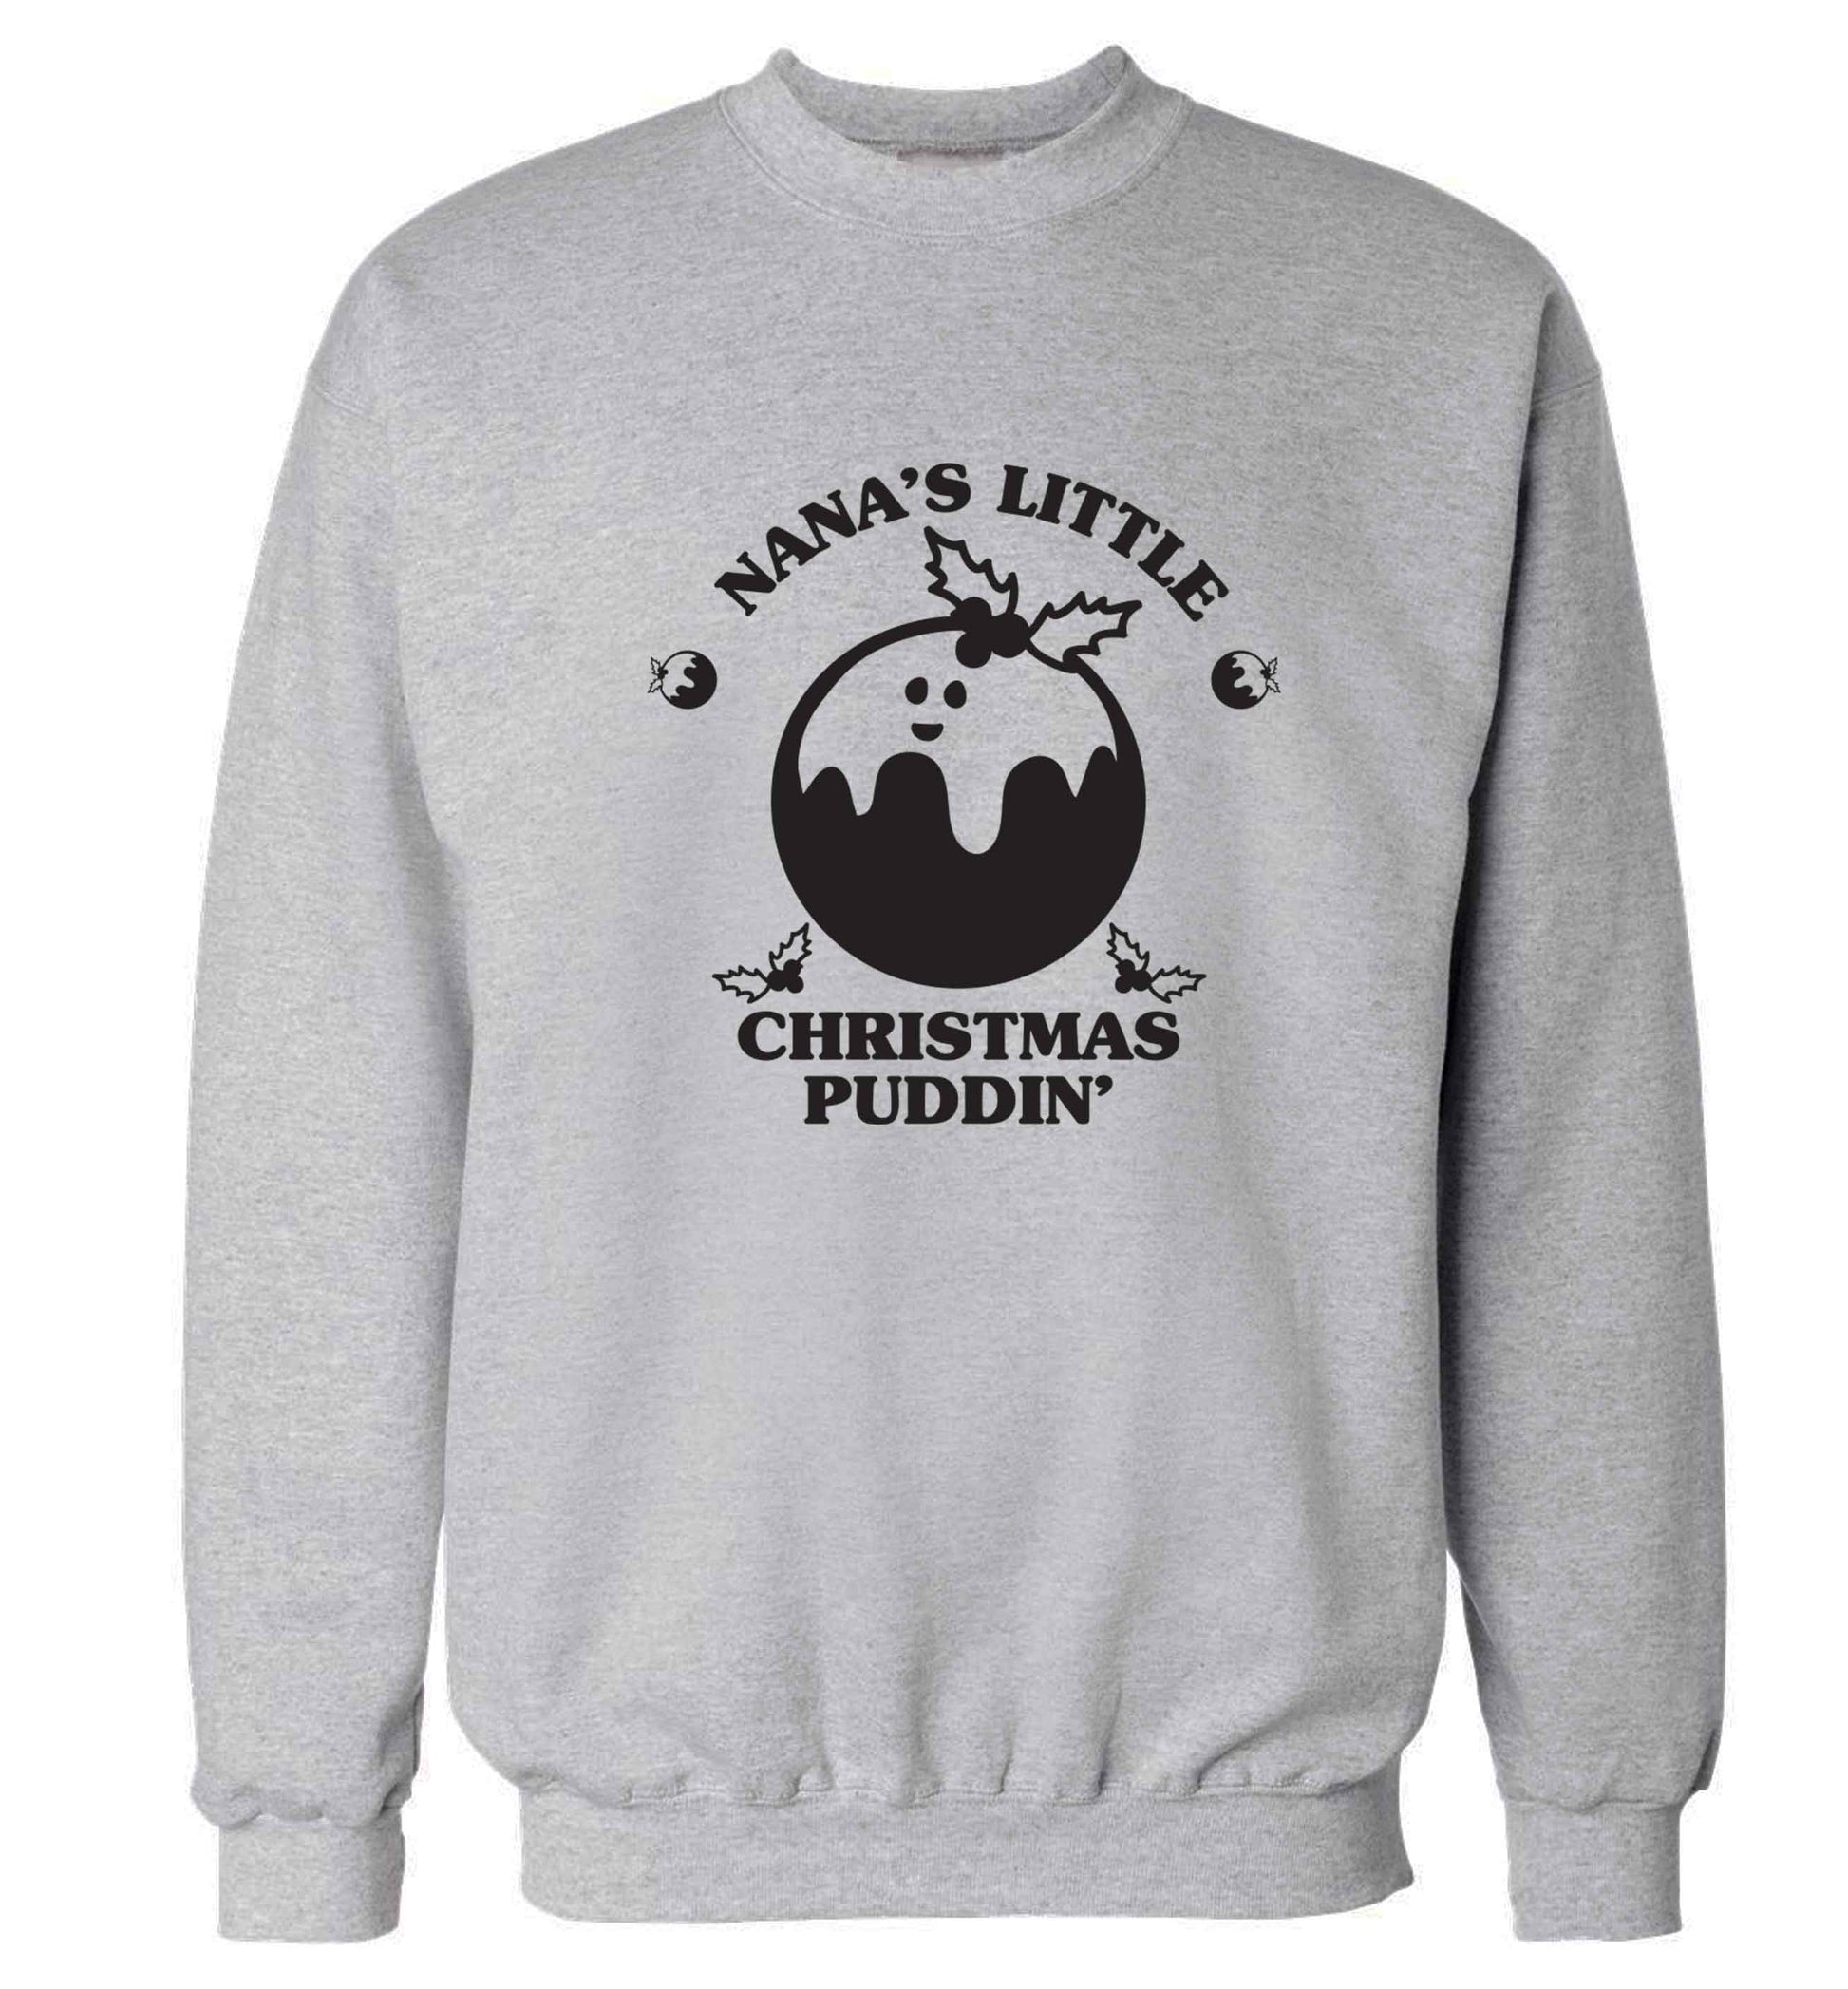 Nana's little Christmas puddin' Adult's unisex grey Sweater 2XL